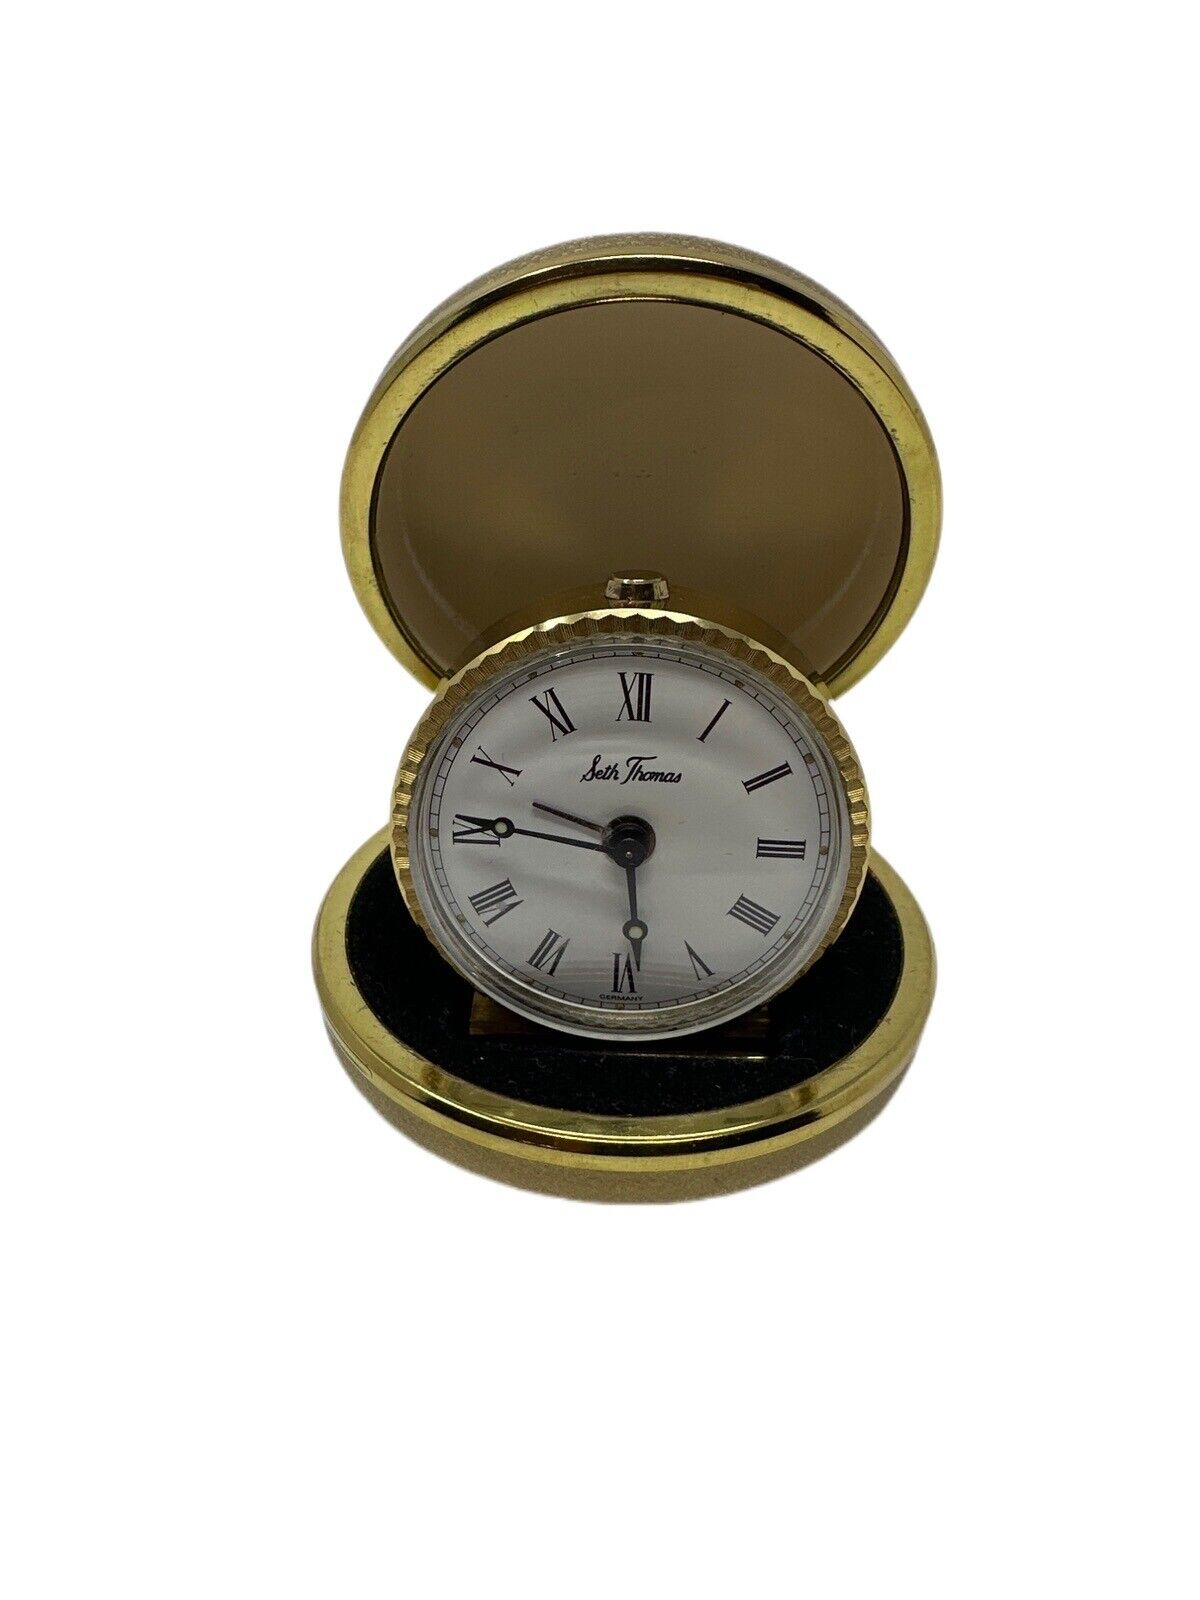 Vintage Seth Thomas Travel Alarm Clock With Original Clam Shell Case Germany